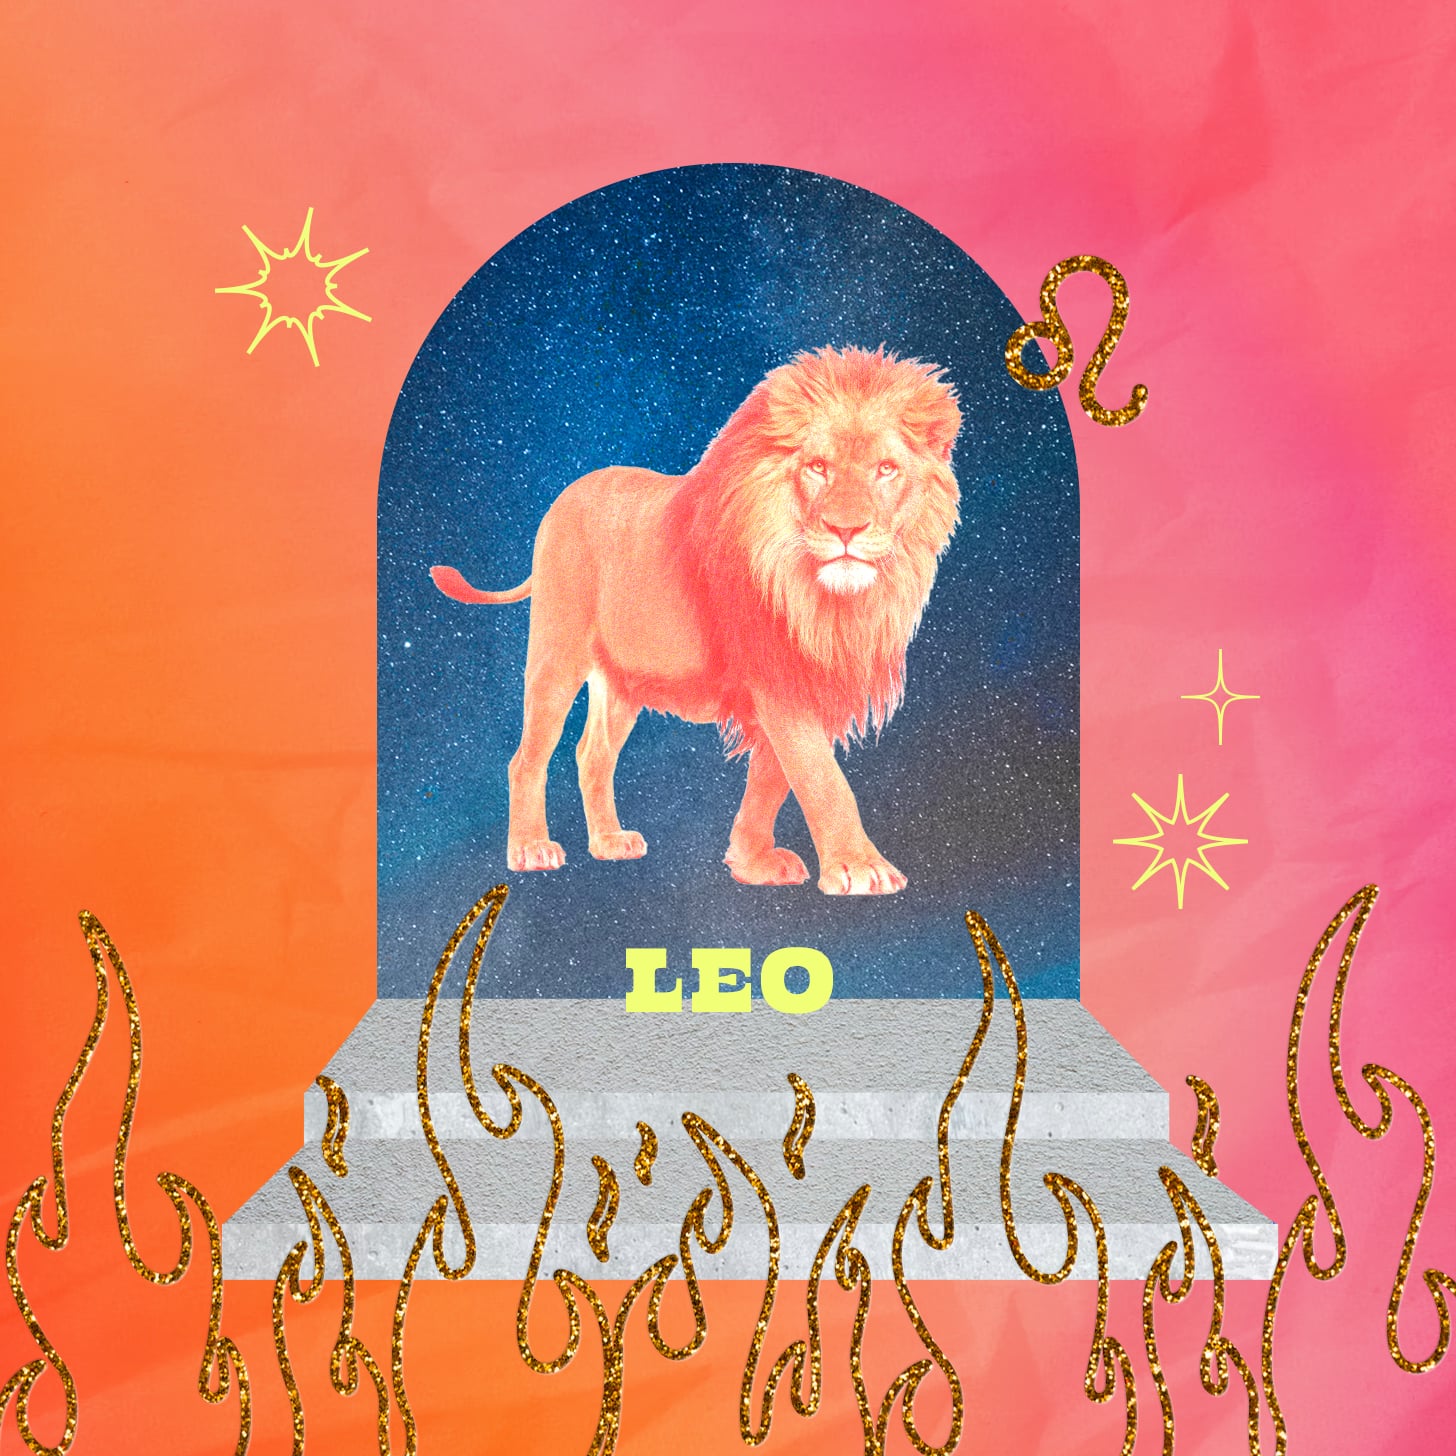 Leo weekly horoscope for October 2, 2022